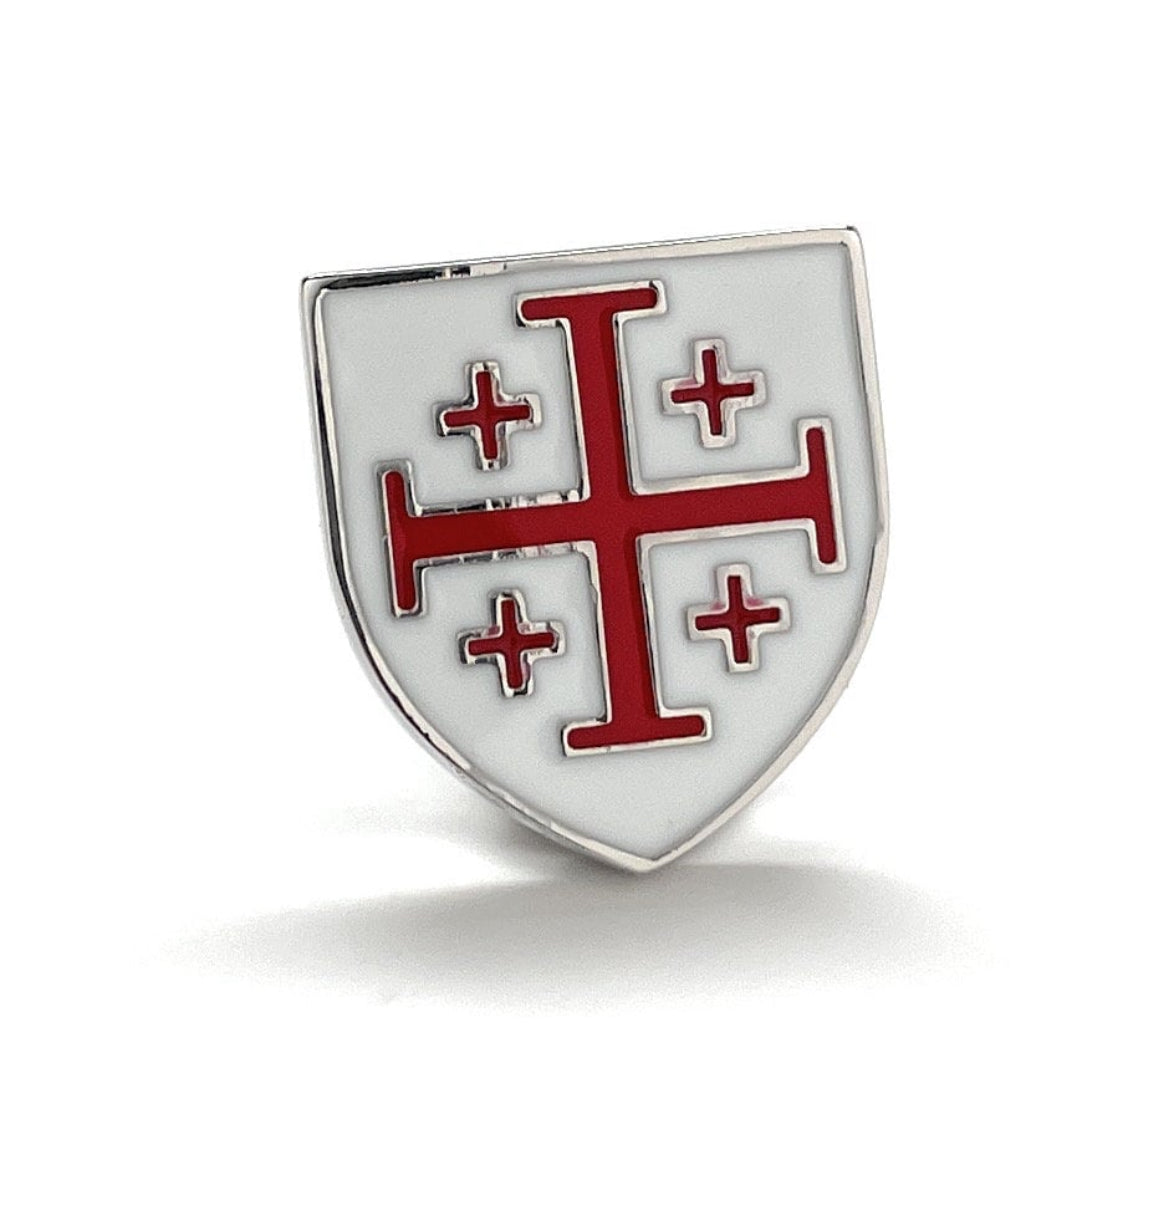 Crusaders Shield Pin Red and White Enamel Pin Jerusalem Cross Lapel Pin 3D Five-Fold Cross Pin Tie Tack Lanyard Pins